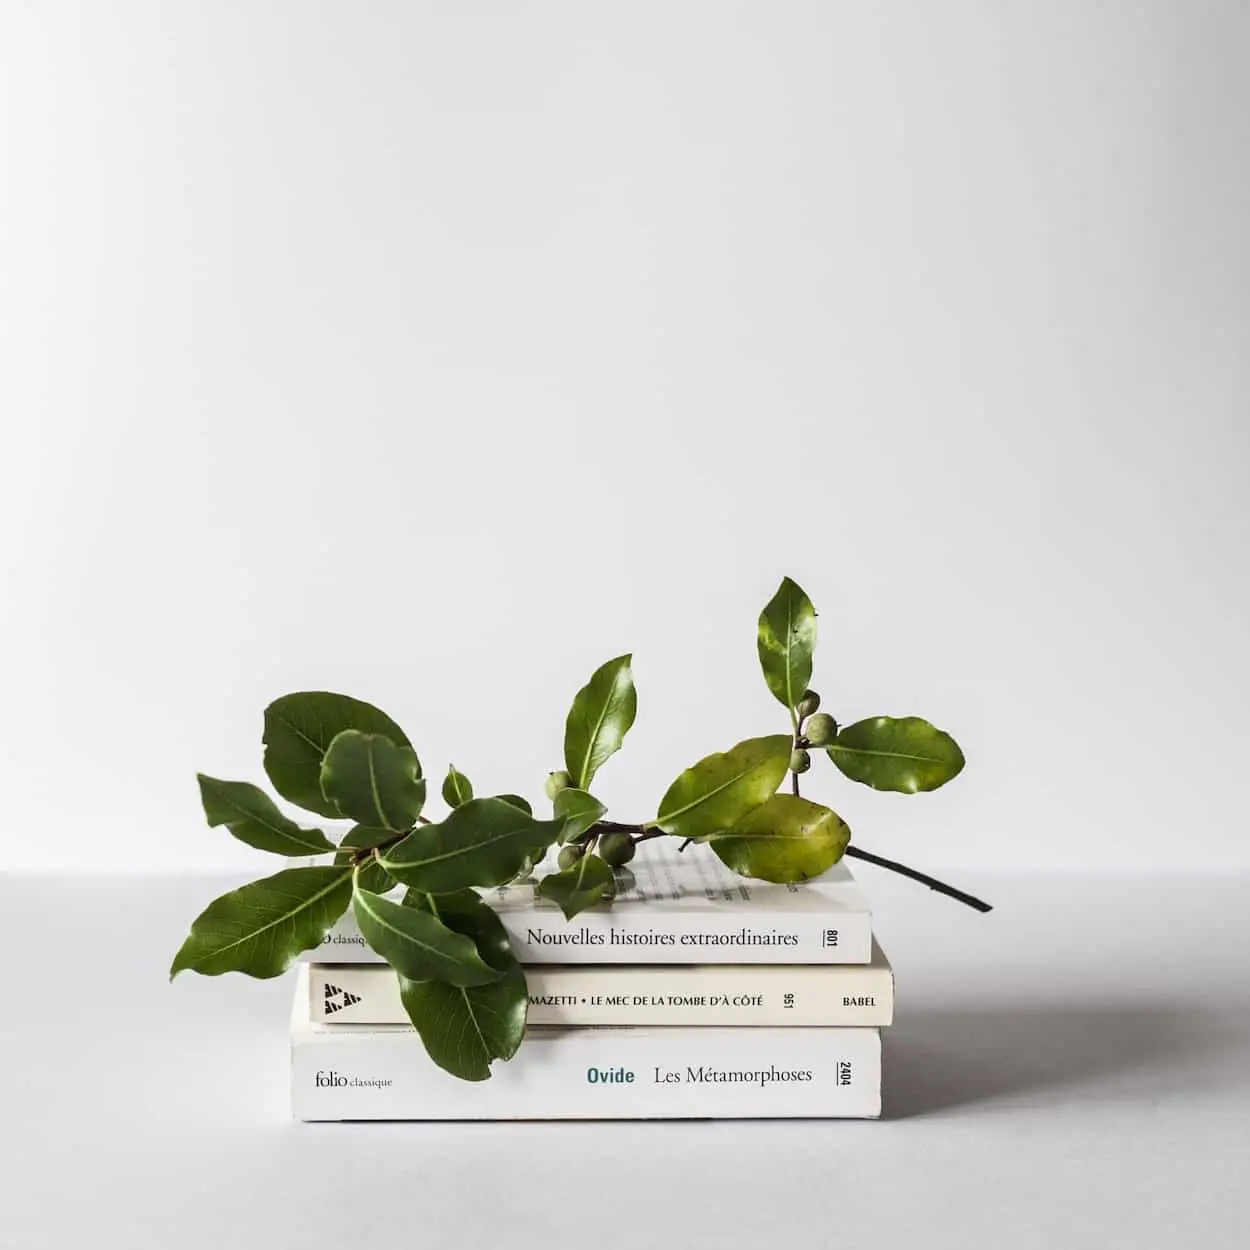 21 minimalist books that inspire simple living Minimalism Co